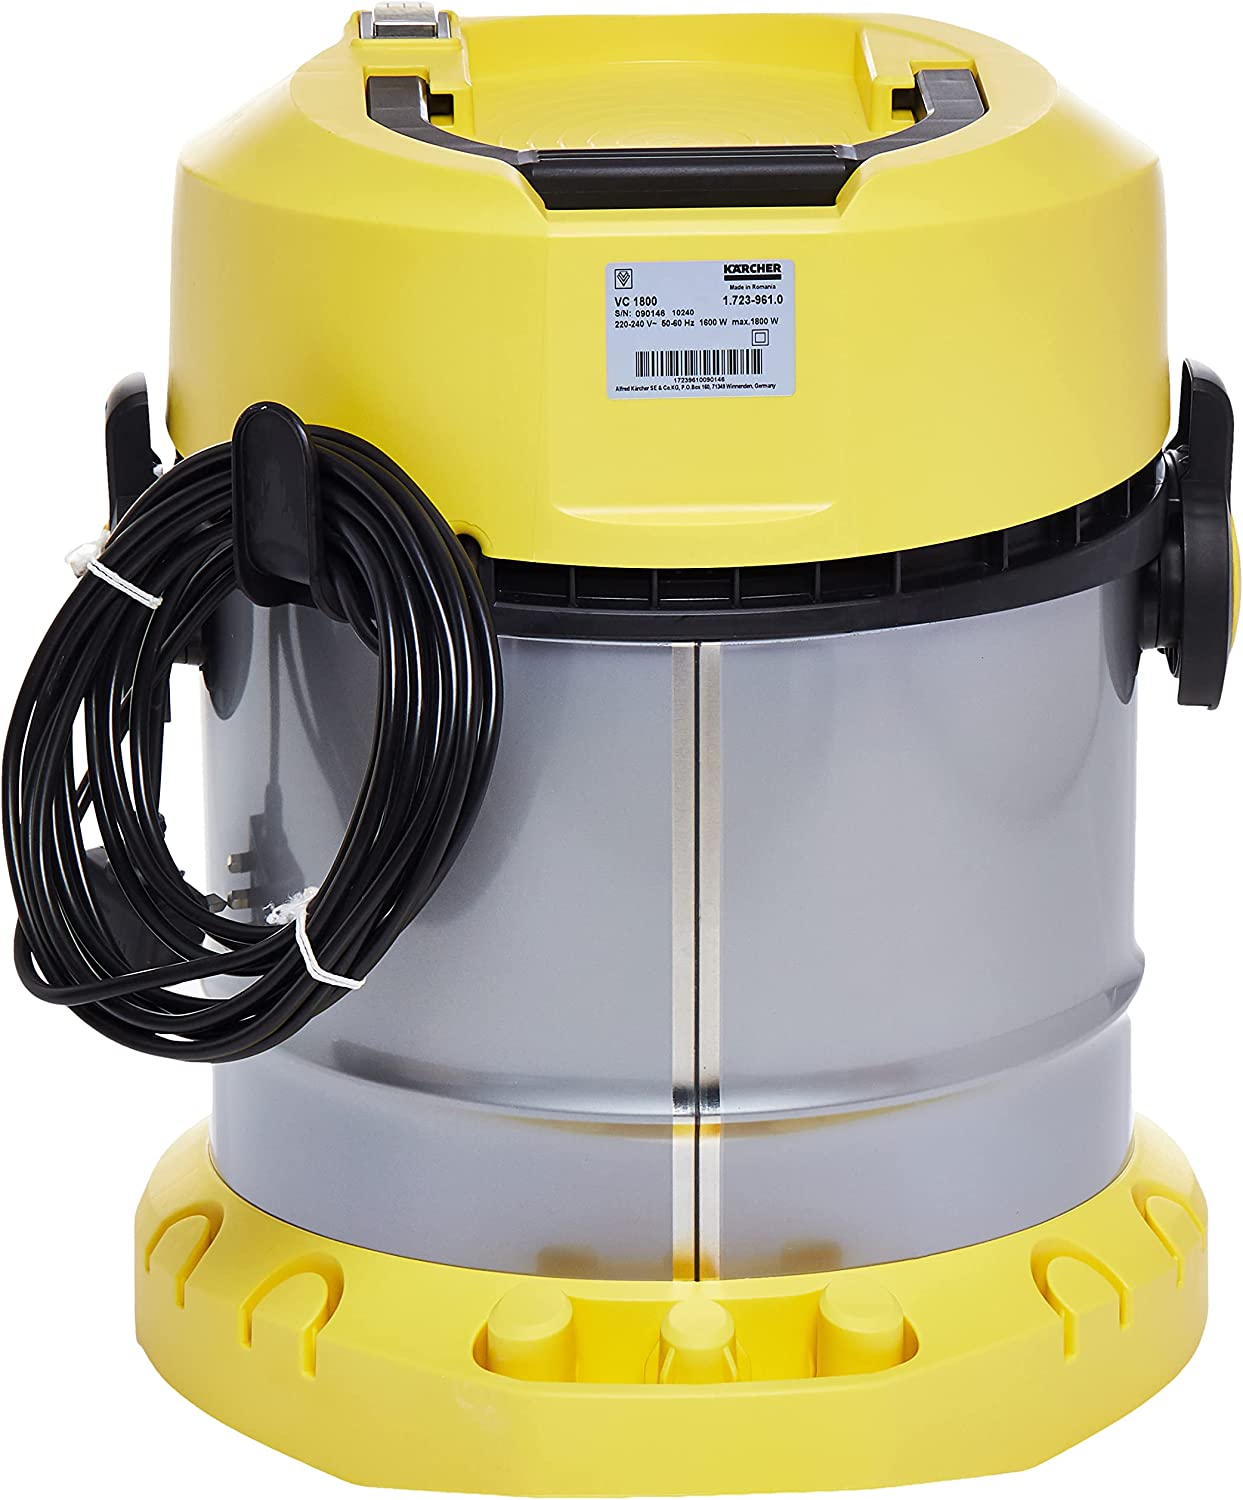 Karcher Multi-Purpose Vacuum Cleaner, 1800 W, Vc.1800, Yellow, 1.723-961.0